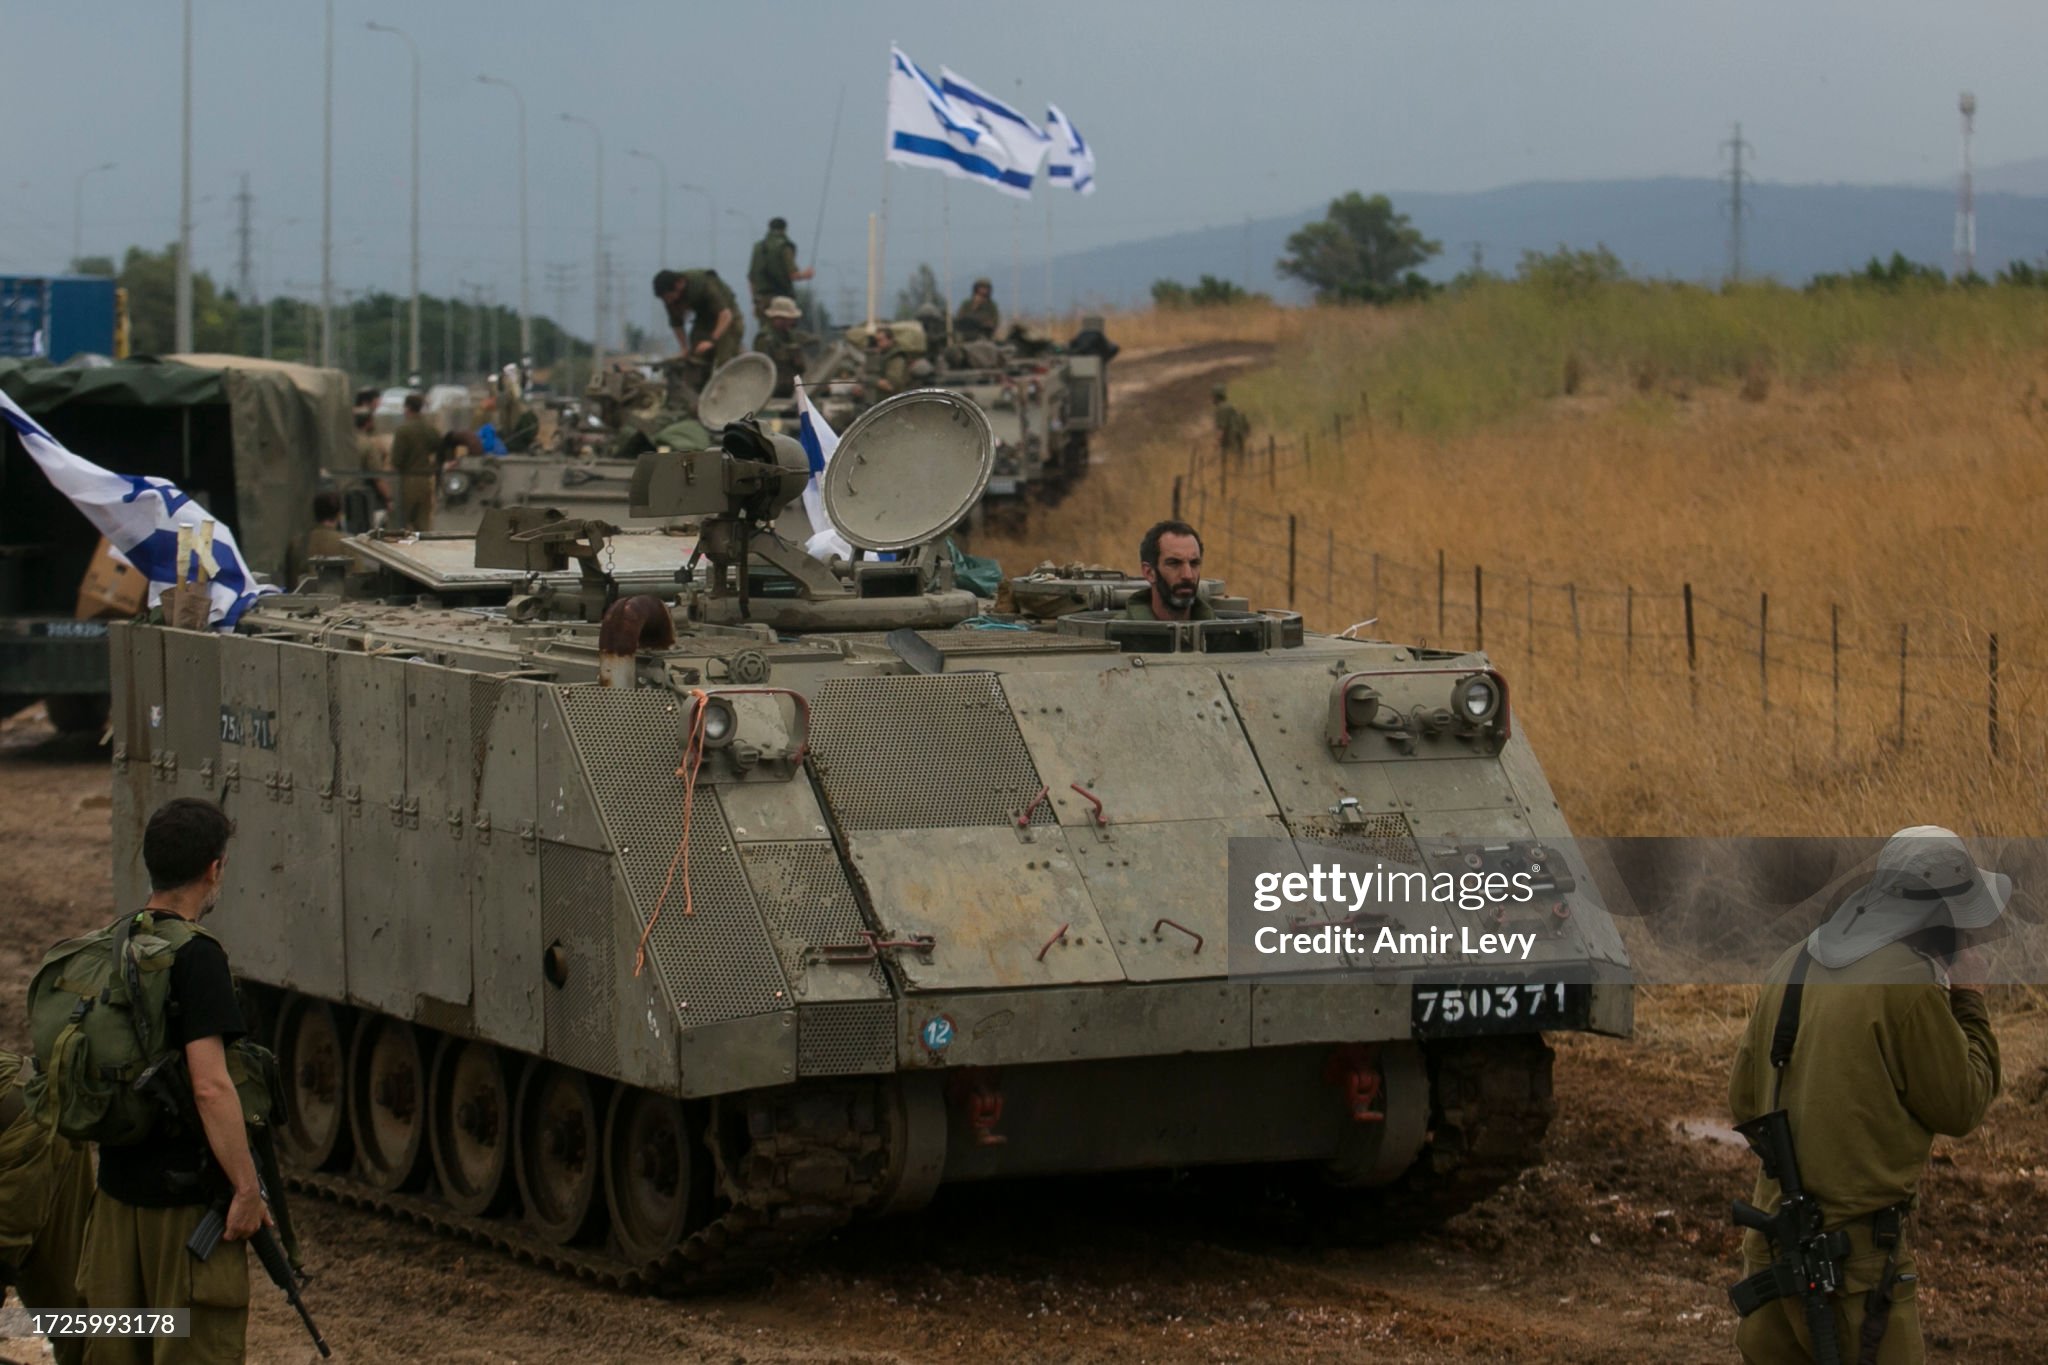 israeli-armor-personnel-carriers-move-in-formation-near-the-israeli-border-with-lebanon-on.jpg?s=2048x2048&w=gi&k=20&c=K1rnXvqxI8oJ8AbAg82n3TBZIIUwcAjSwAeDCzNw8Tc=